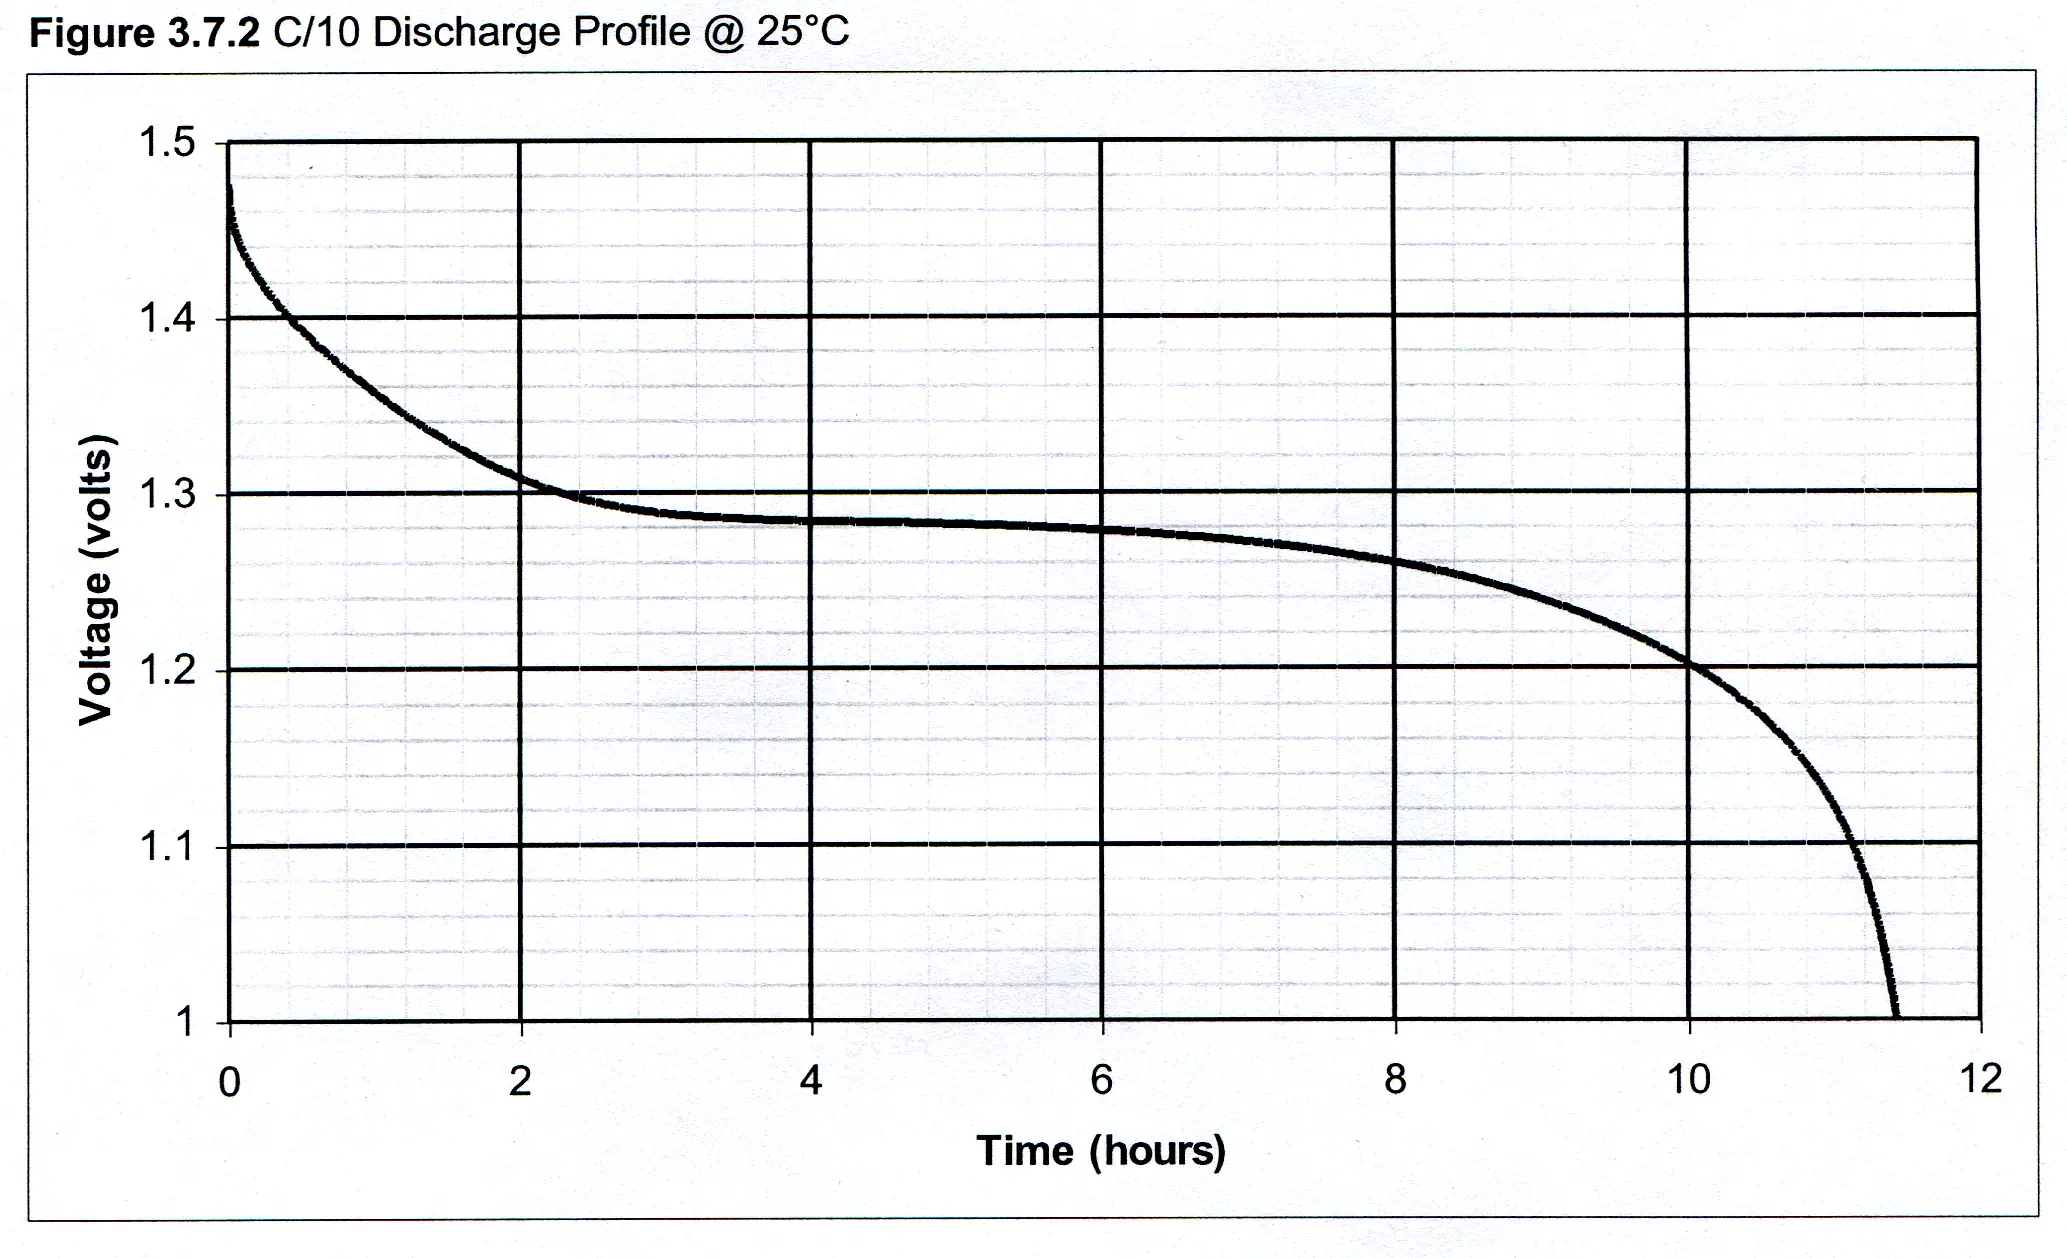 Discharge profile